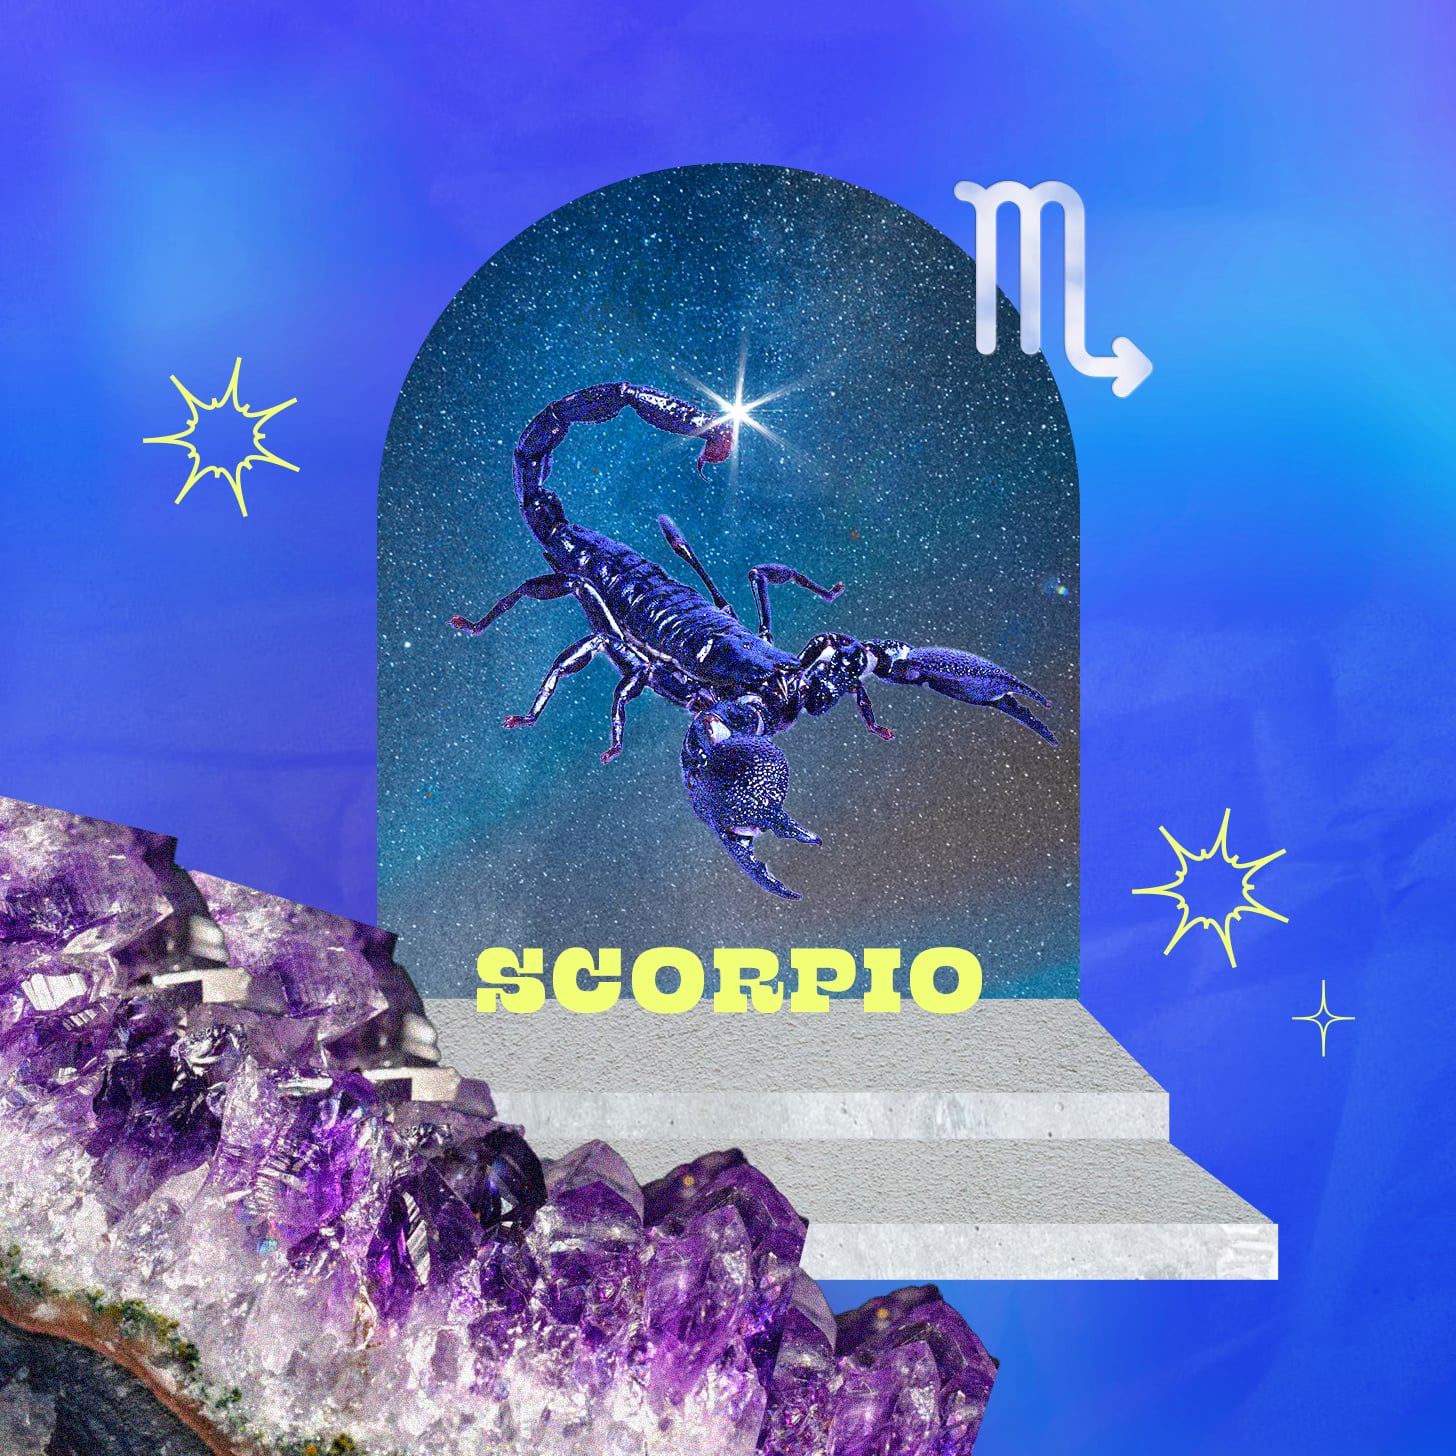 Scorpio weekly horoscope for week of July 24, 2022